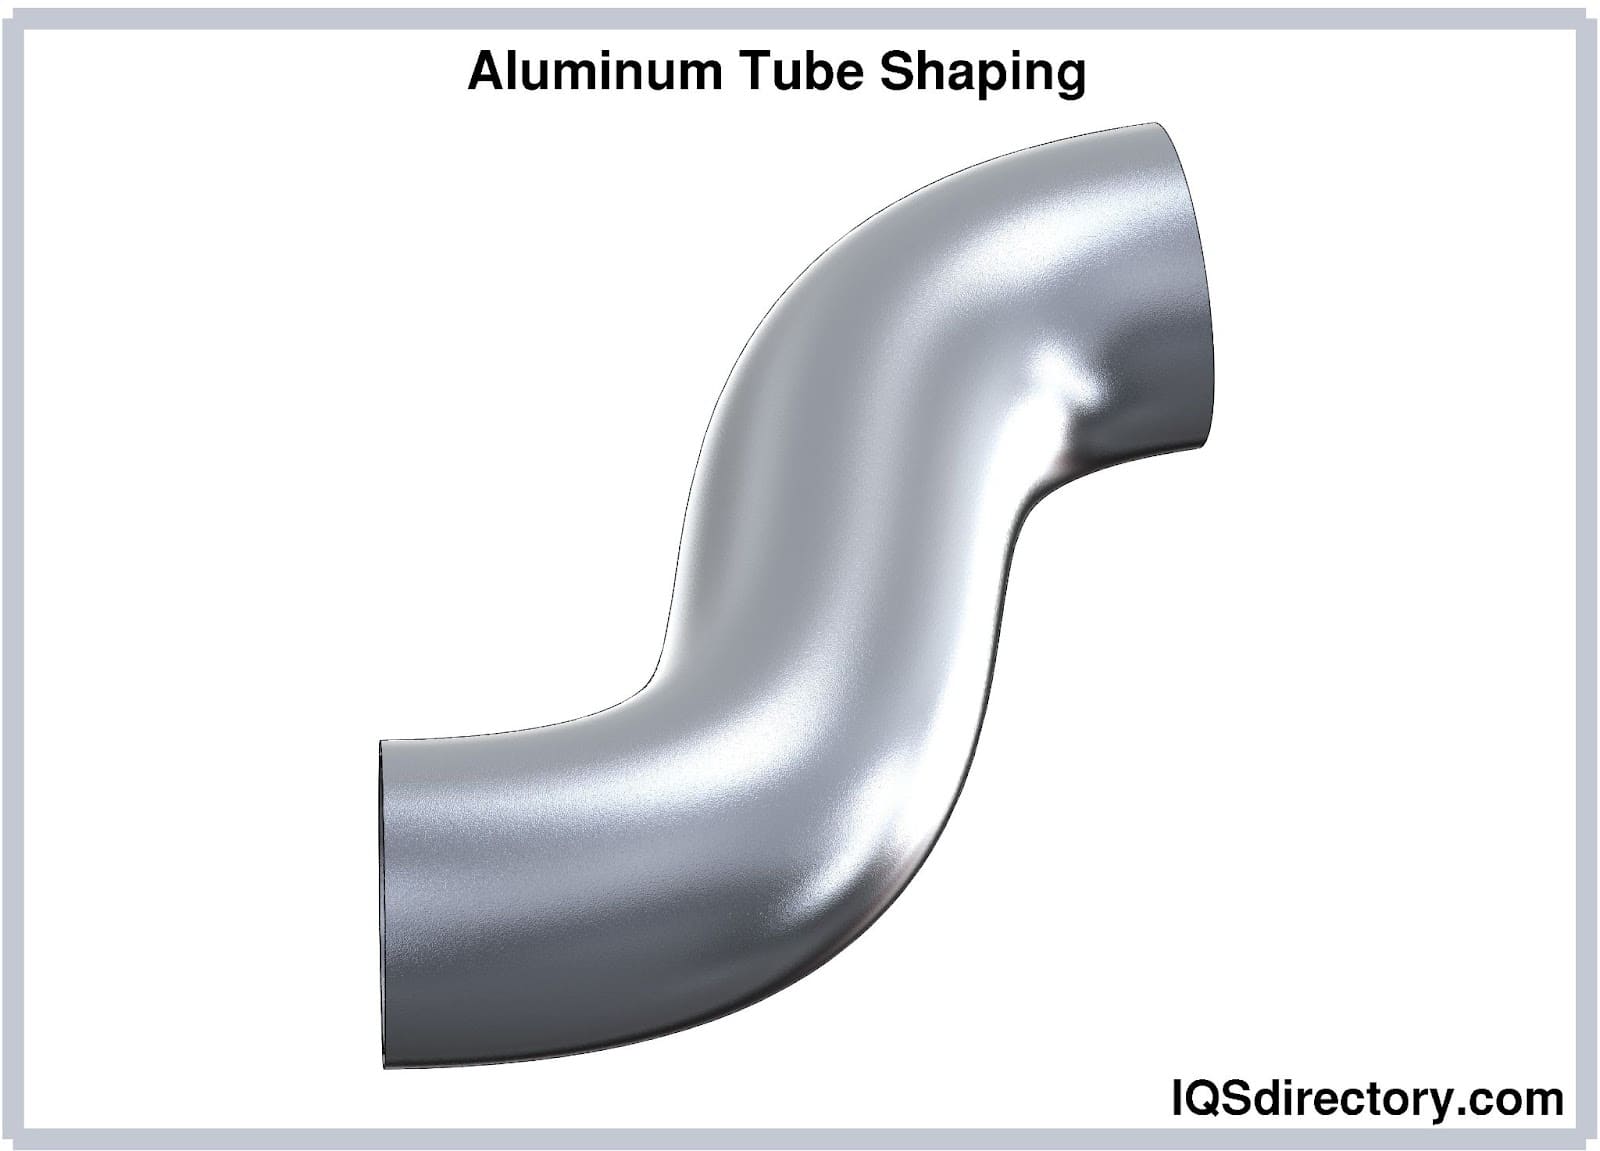 Aluminum Tube Shaping